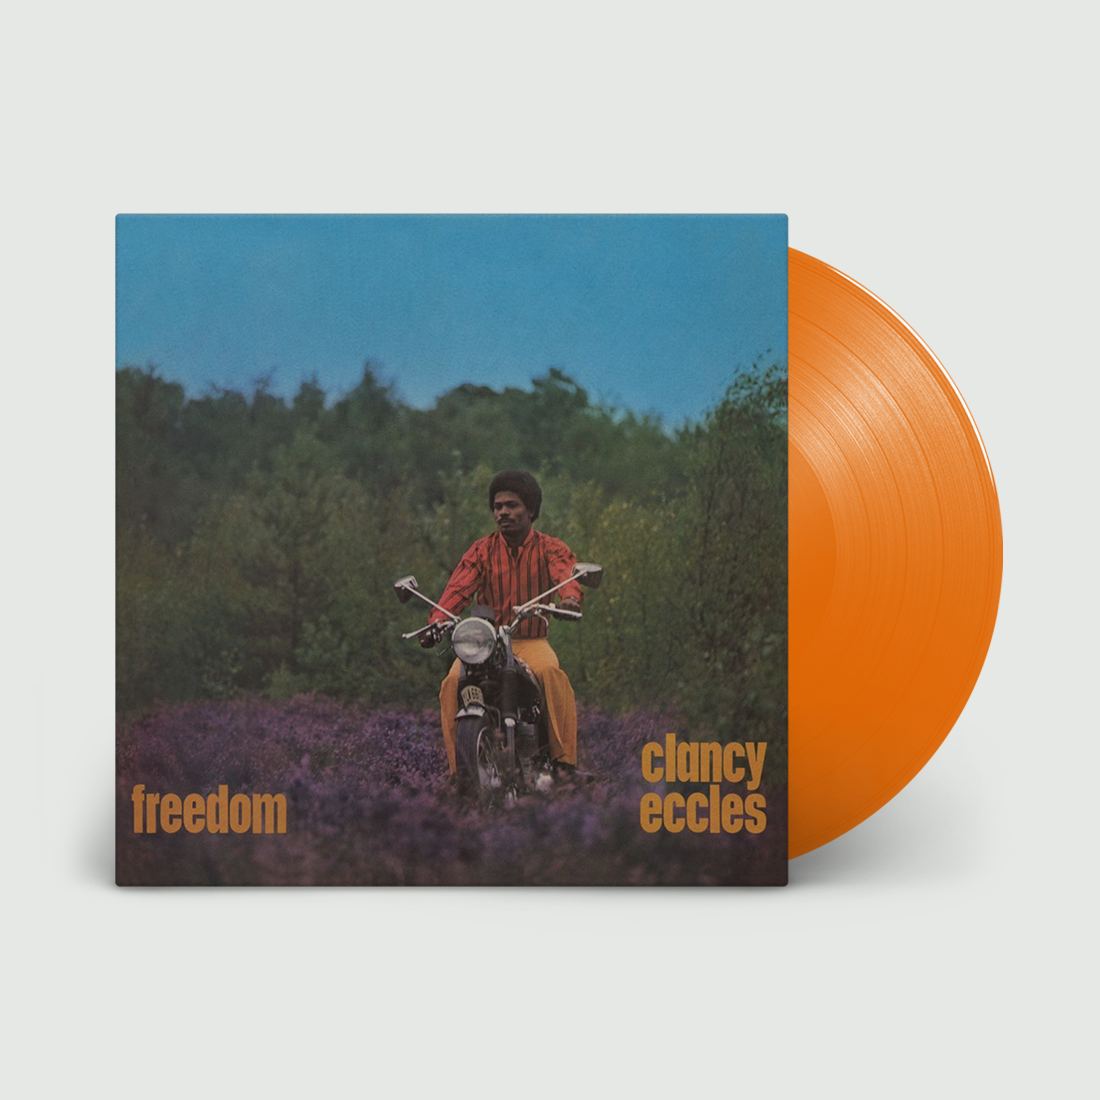 Freedom: Limited Edition Orange Vinyl LP